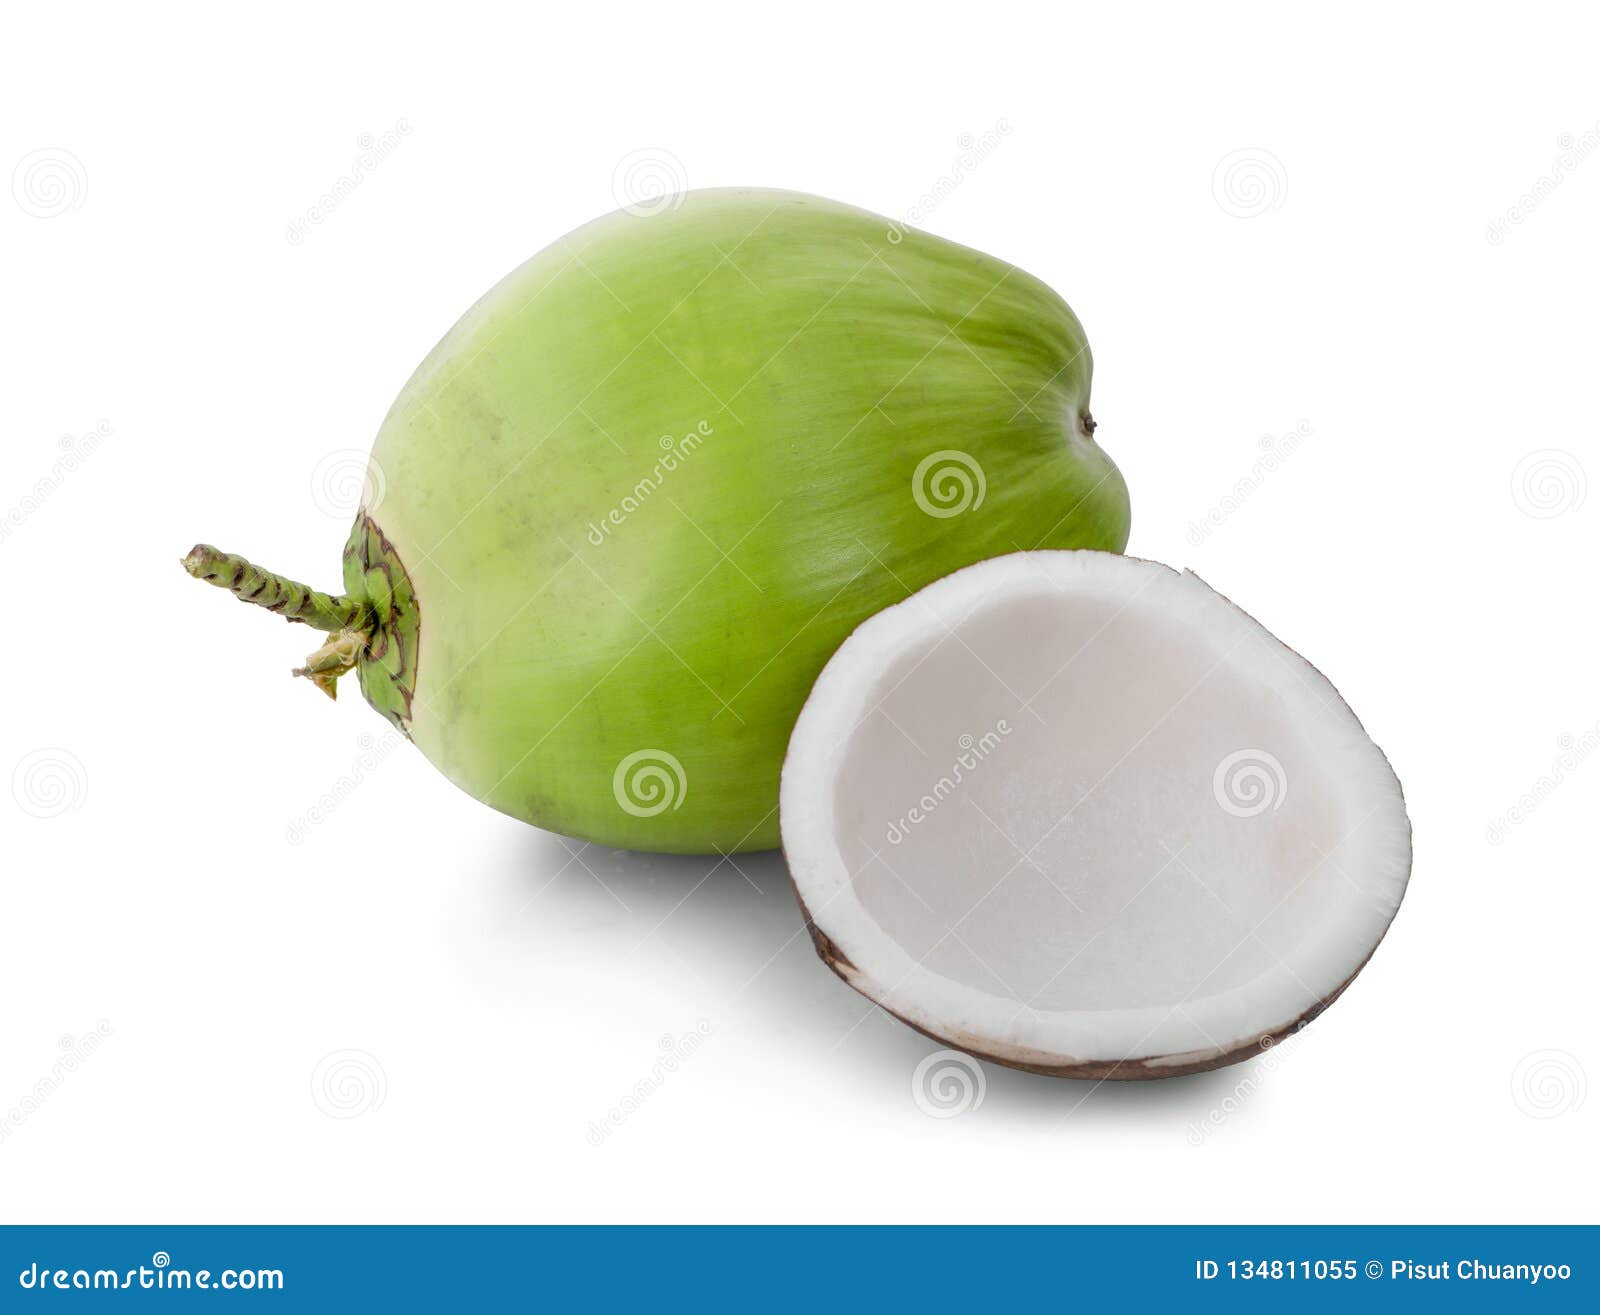 Green Coconut Fruit Isolated on White Background Stock Image - Image of ...